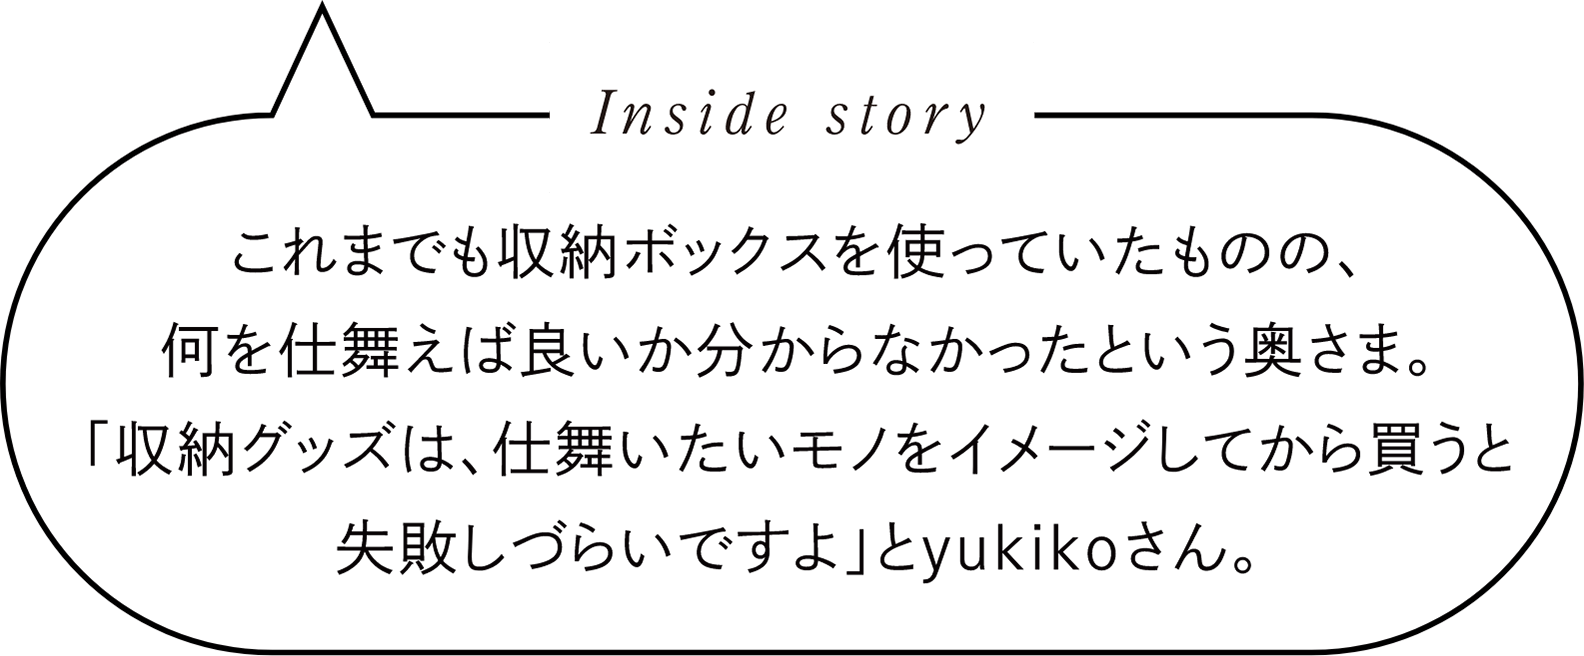 Inside story　これまでも収納ボックスを使っていたものの、何を仕舞えば良いか分からなかったという奥さま。「収納グッズは、仕舞いたいモノをイメージしてから買うと失敗しづらいですよ」とyukikoさん。